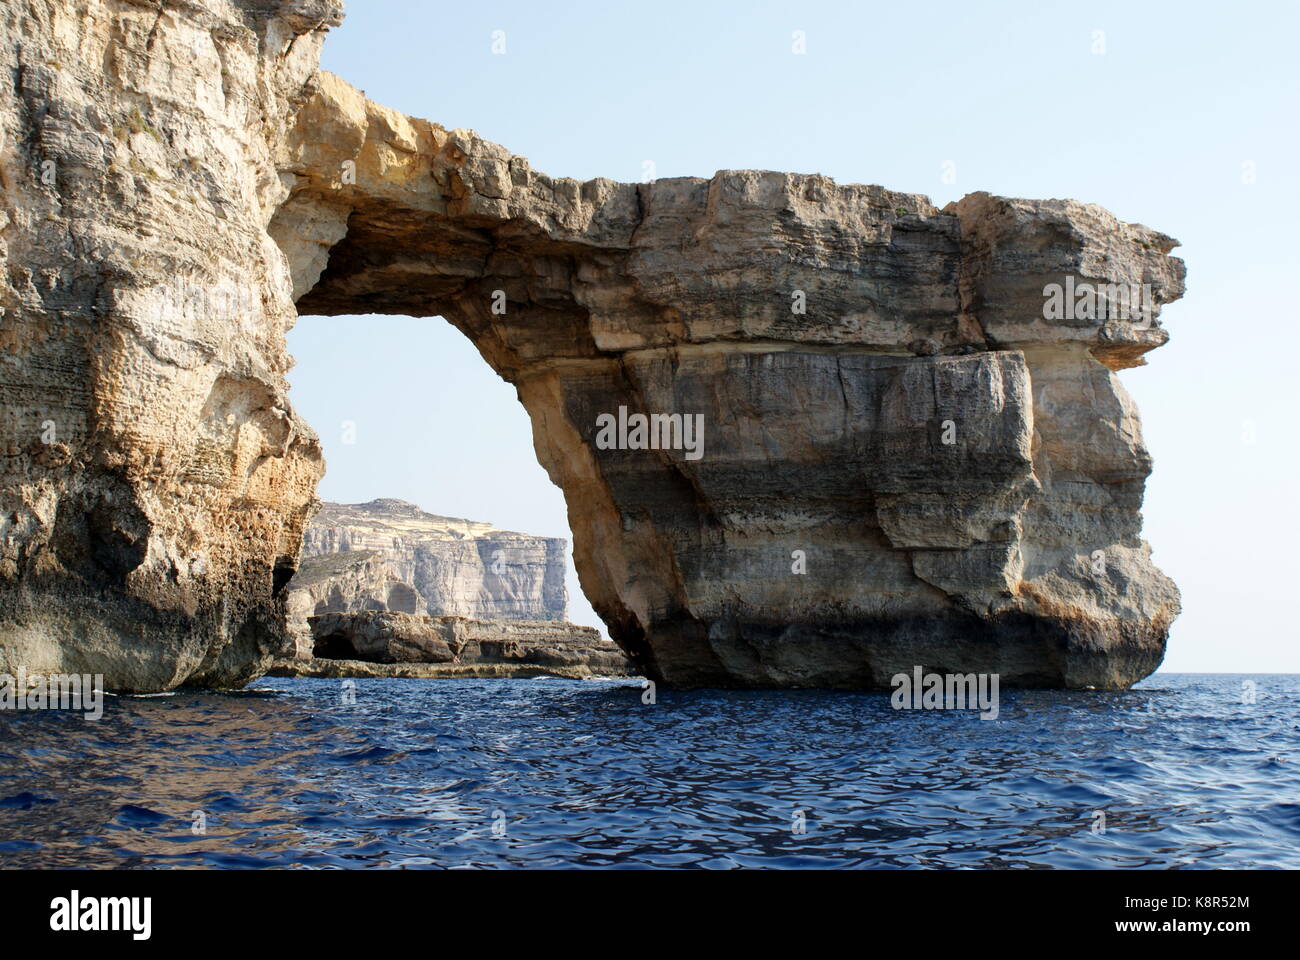 The Azure window, Dwejra bay, San Lawrenz, Gozo, Malta Stock Photo